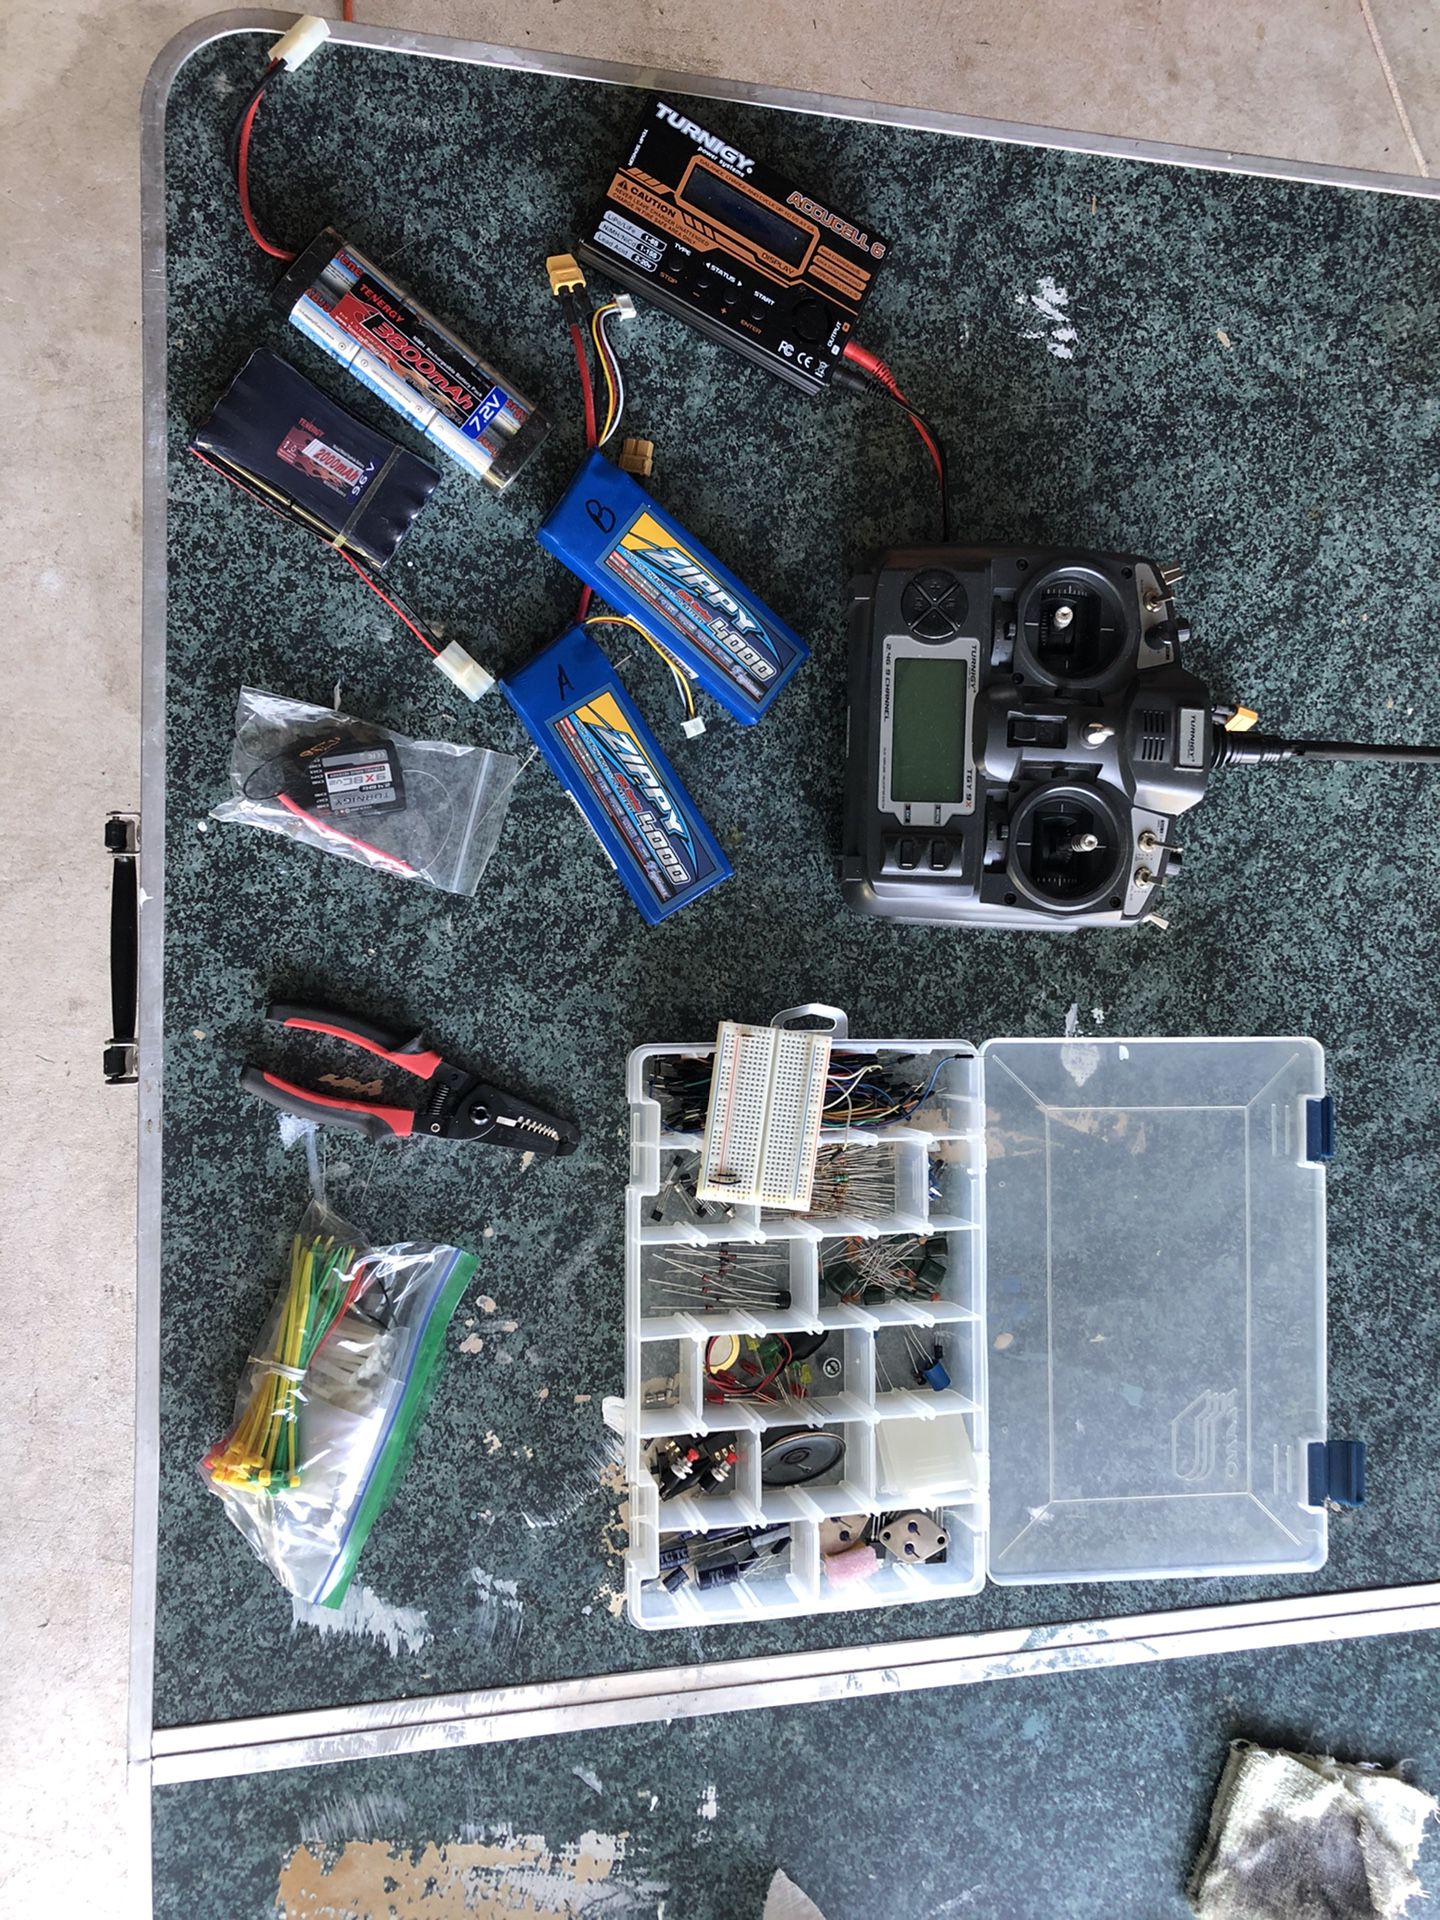 RC stuff, Turnigy controller + charger, Zippy Li-Po batteries, more